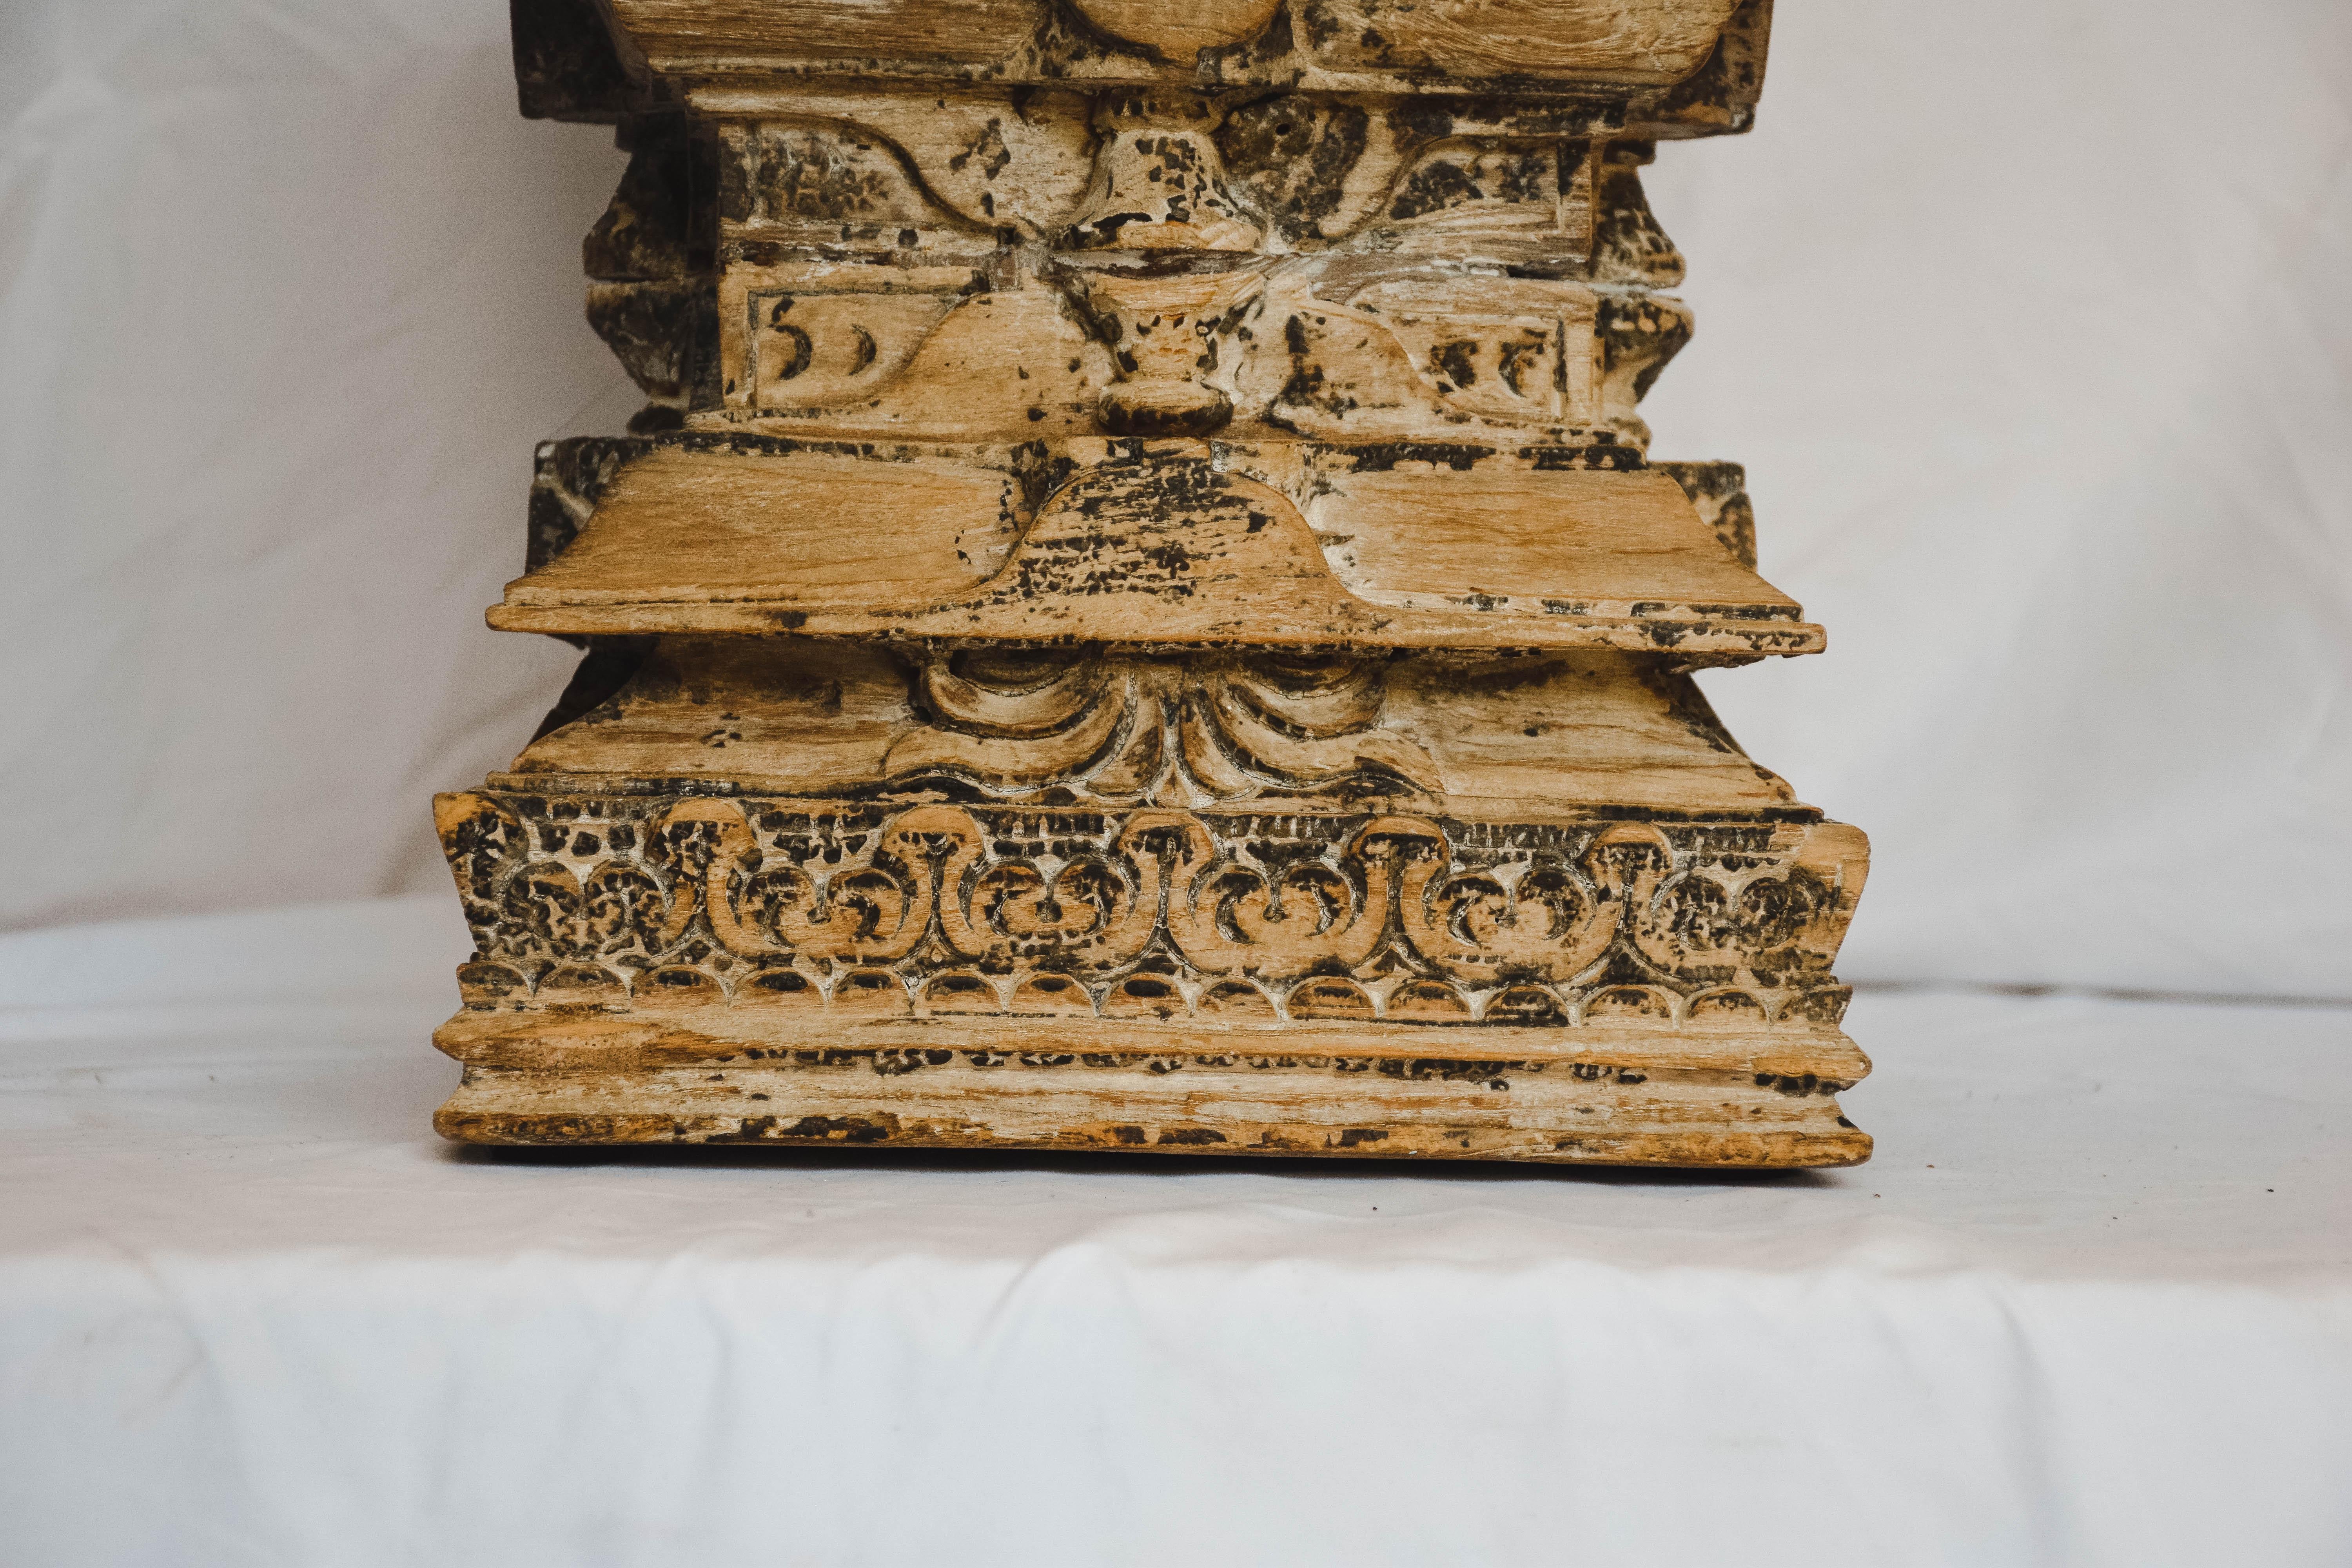 Hand-Carved Antique Carved Wood Column Capital